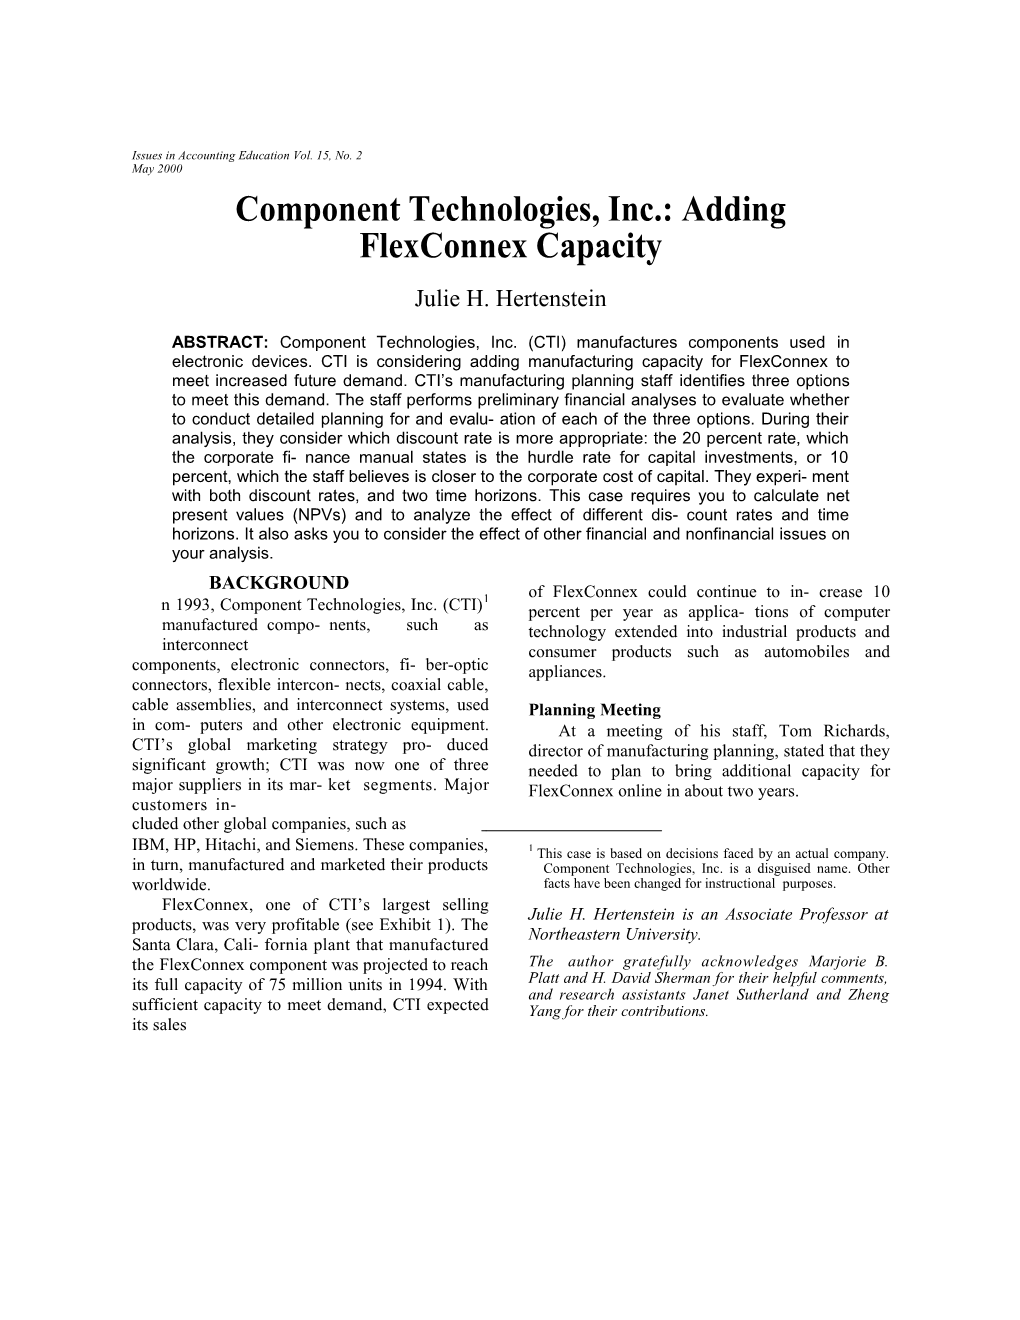 Component Technologies, Inc.: Adding Flexconnex Capacity